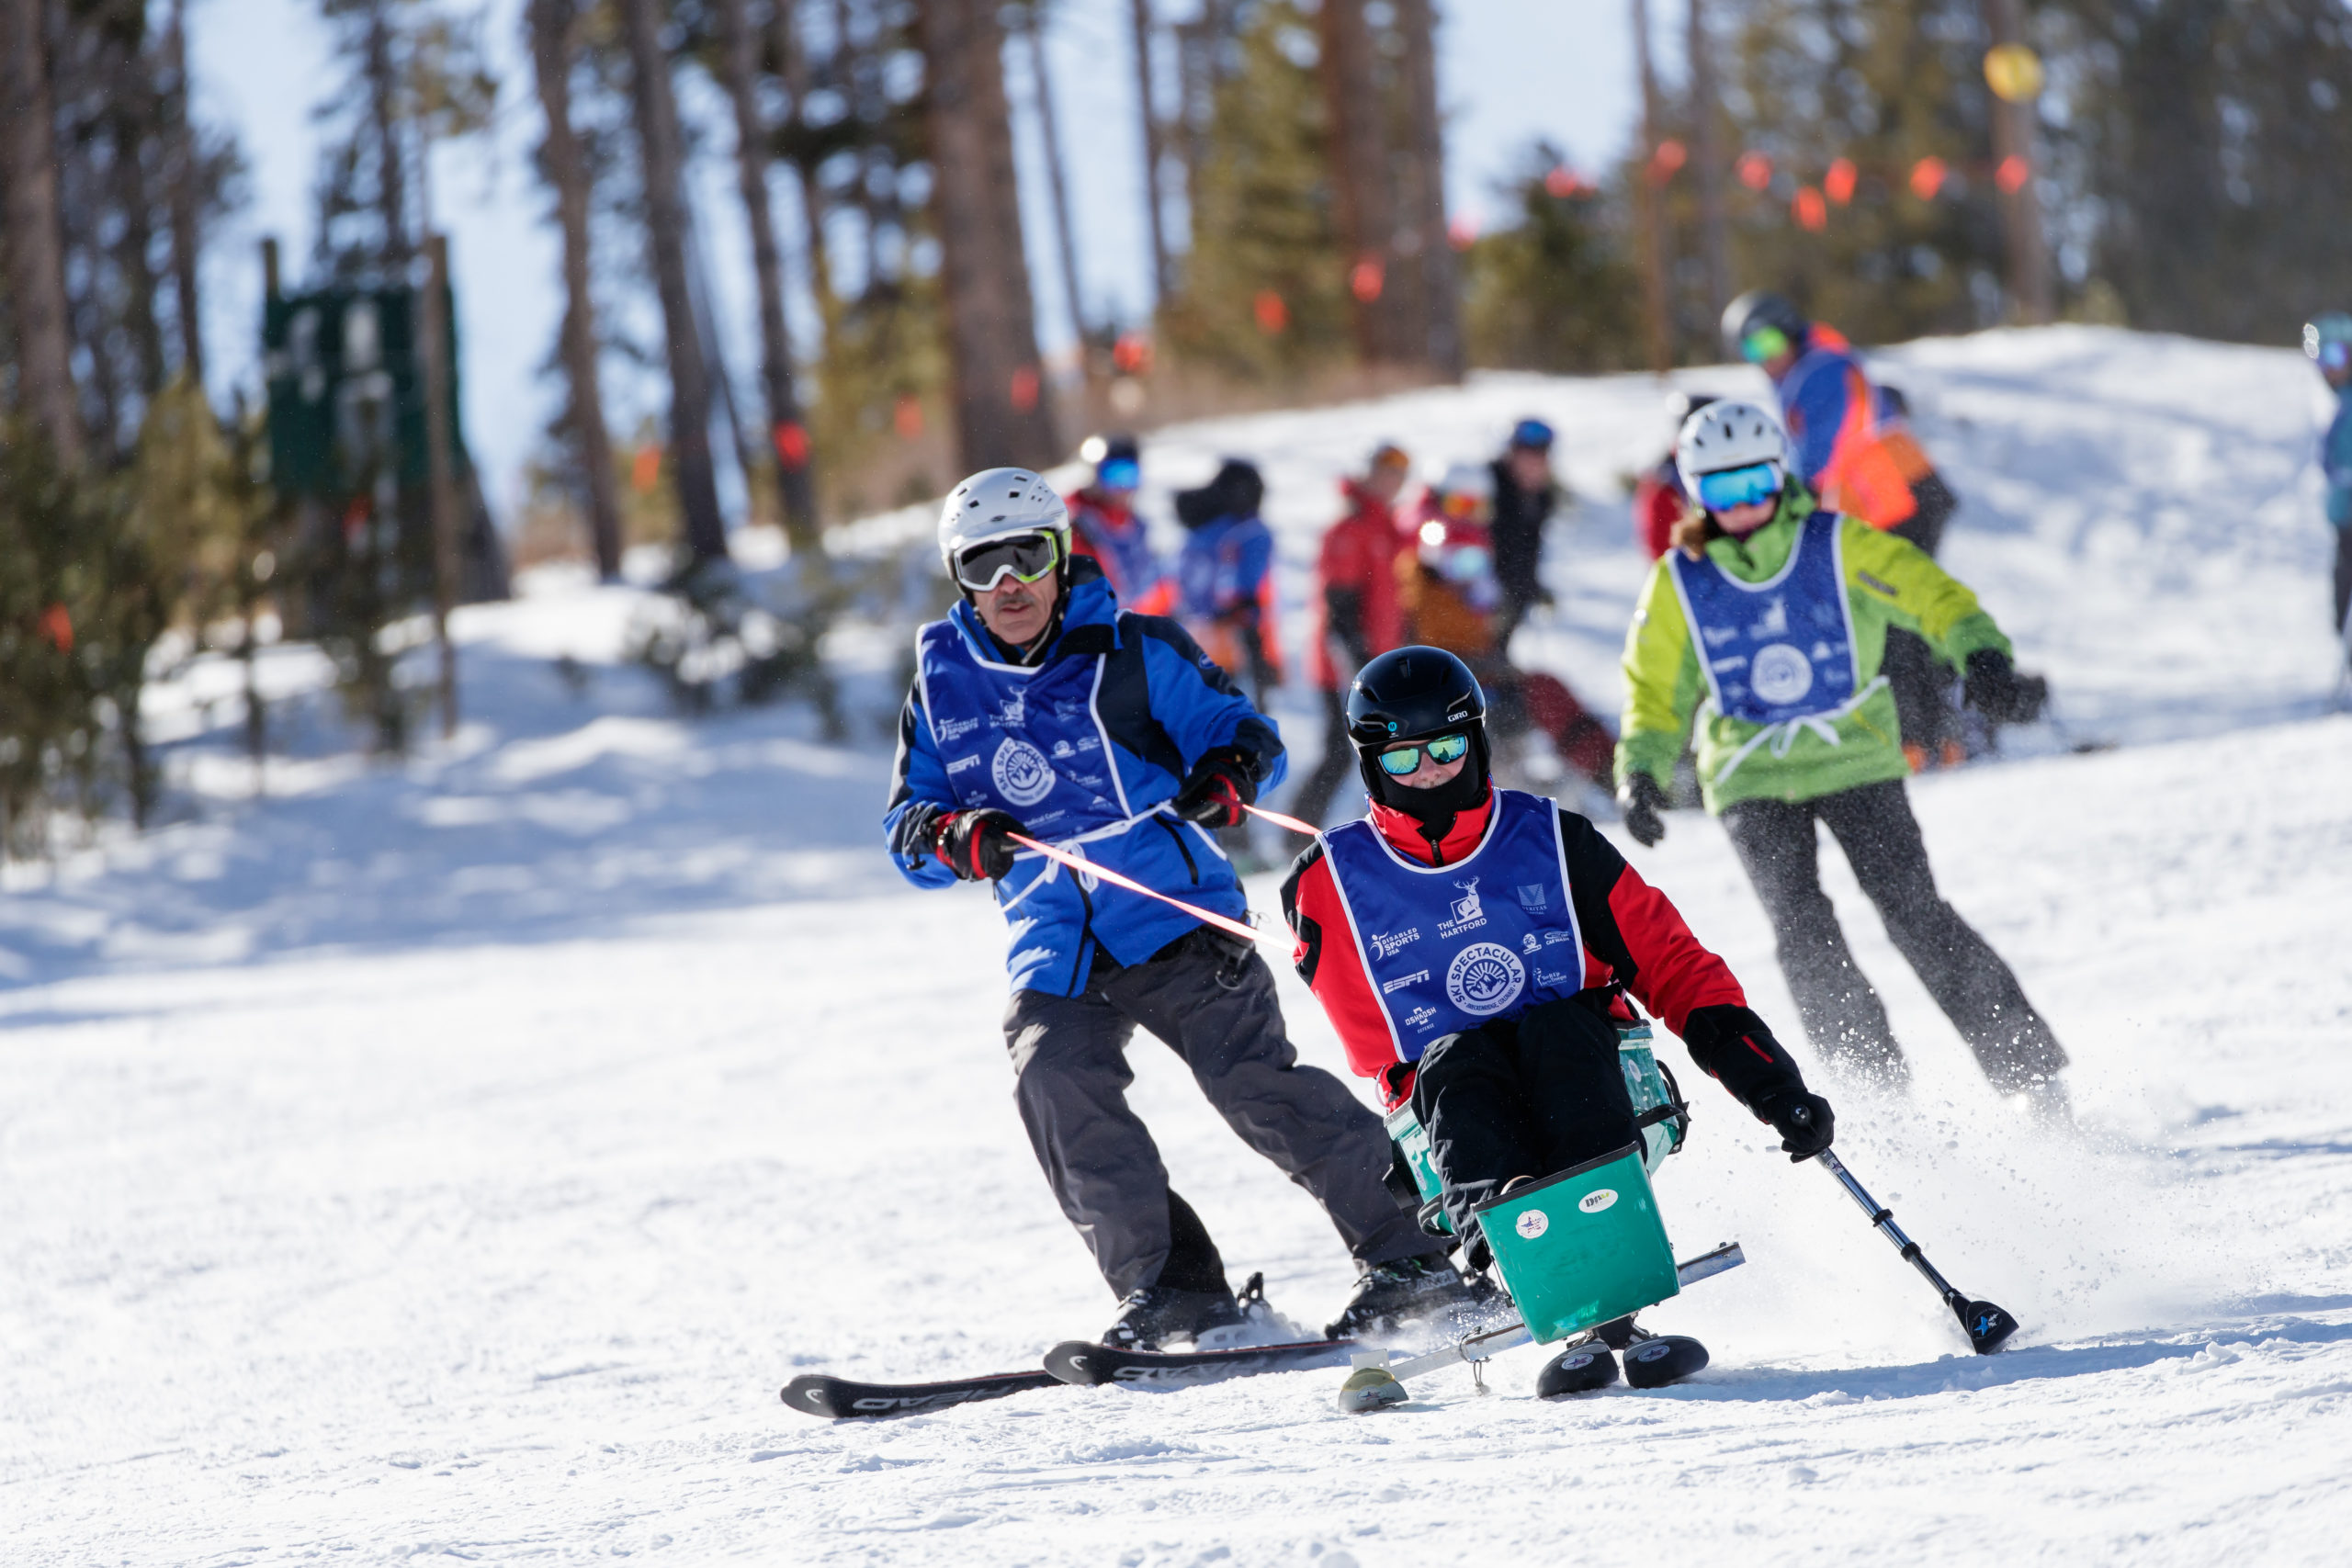 Athletes skiing with dual ski